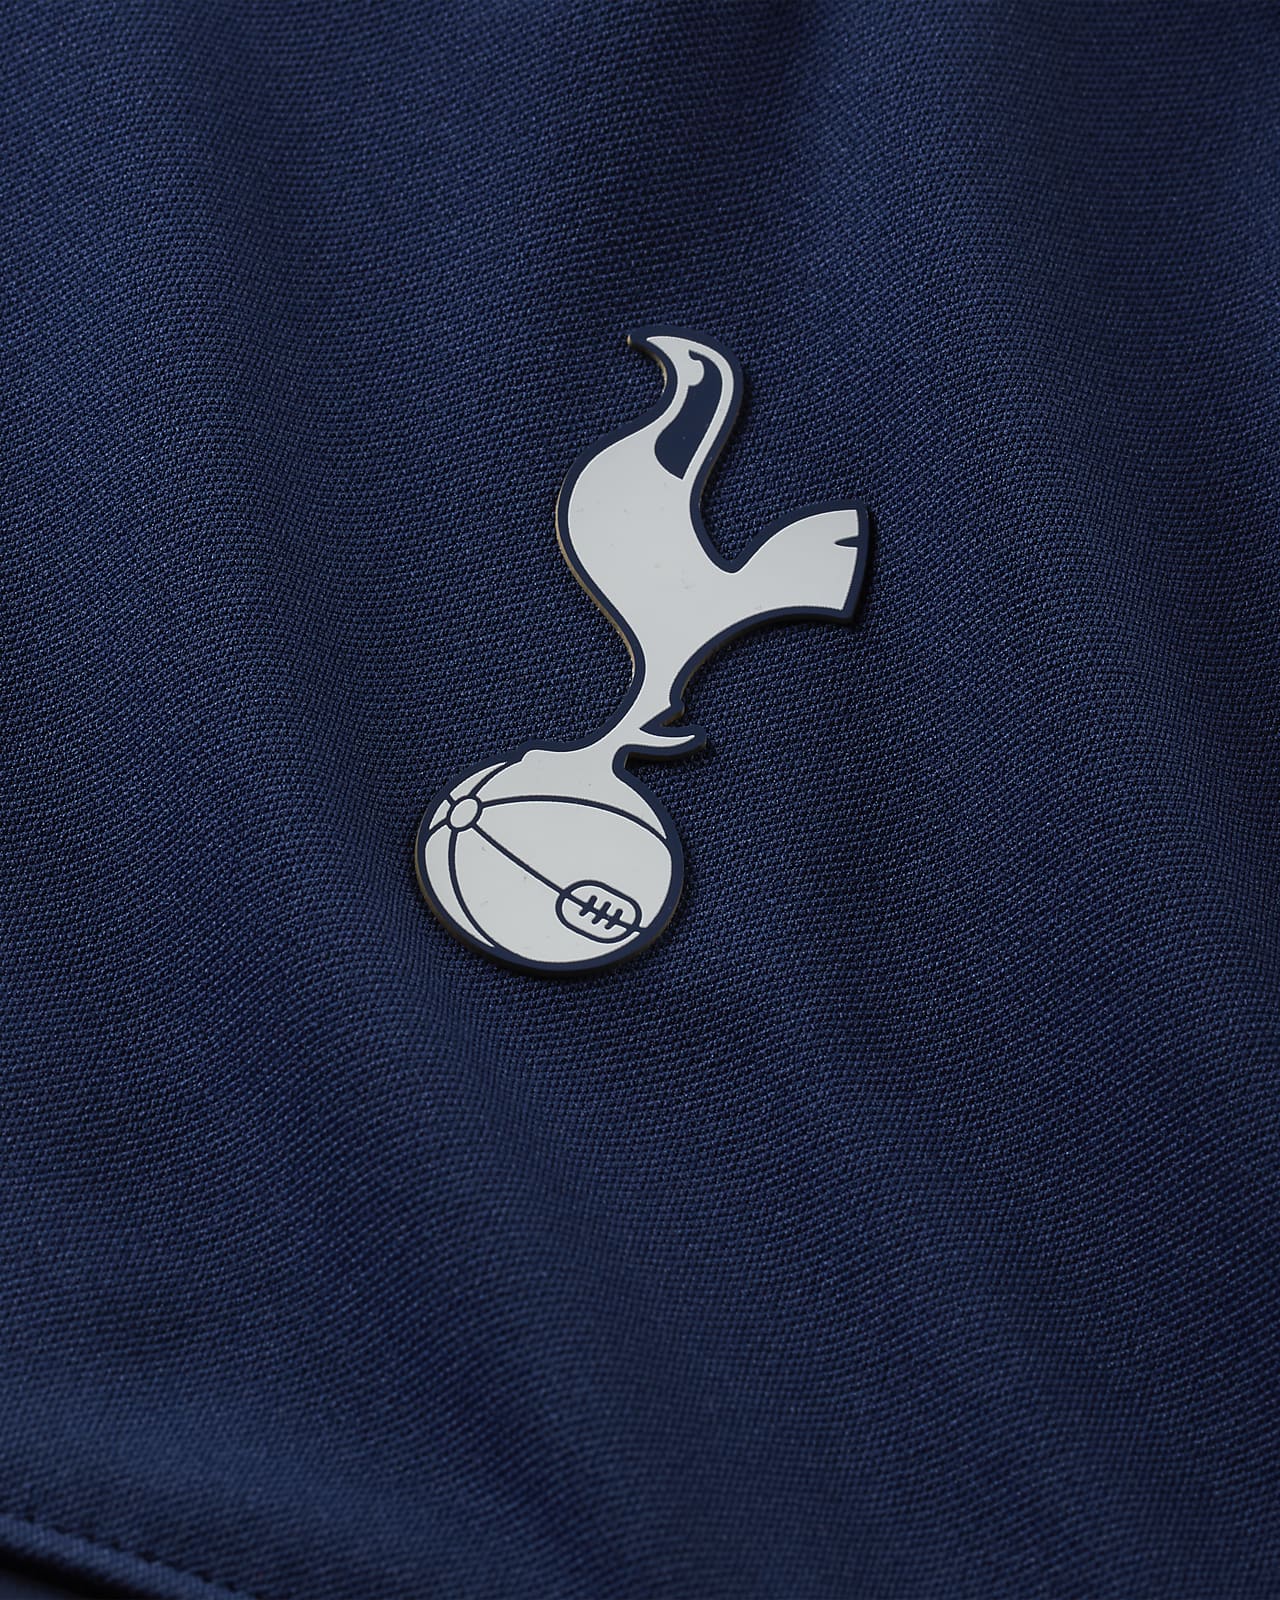 One Size Blue Tottenham Hotspur FC Signature Soccer Ball